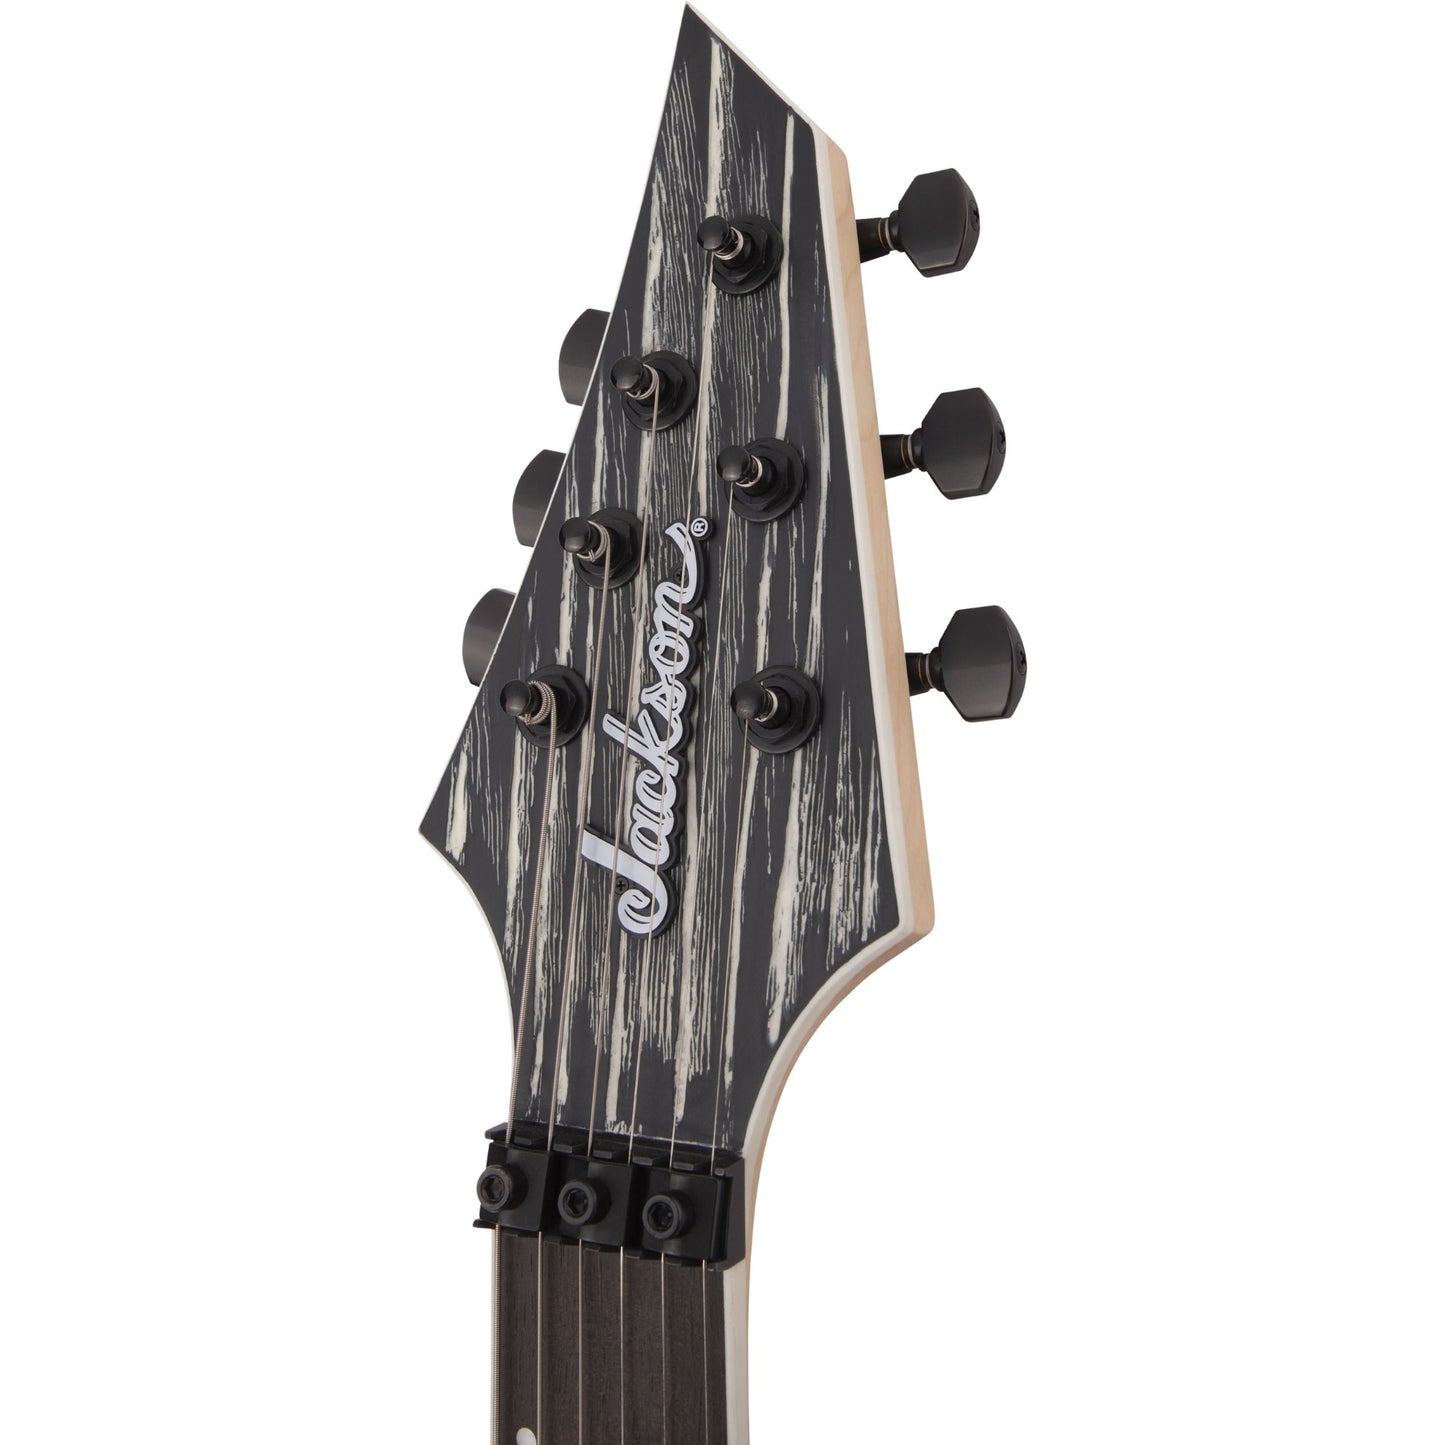 Jackson Pro Series Dinky® DK Modern Ash FR6 Electric Guitar, Baked White